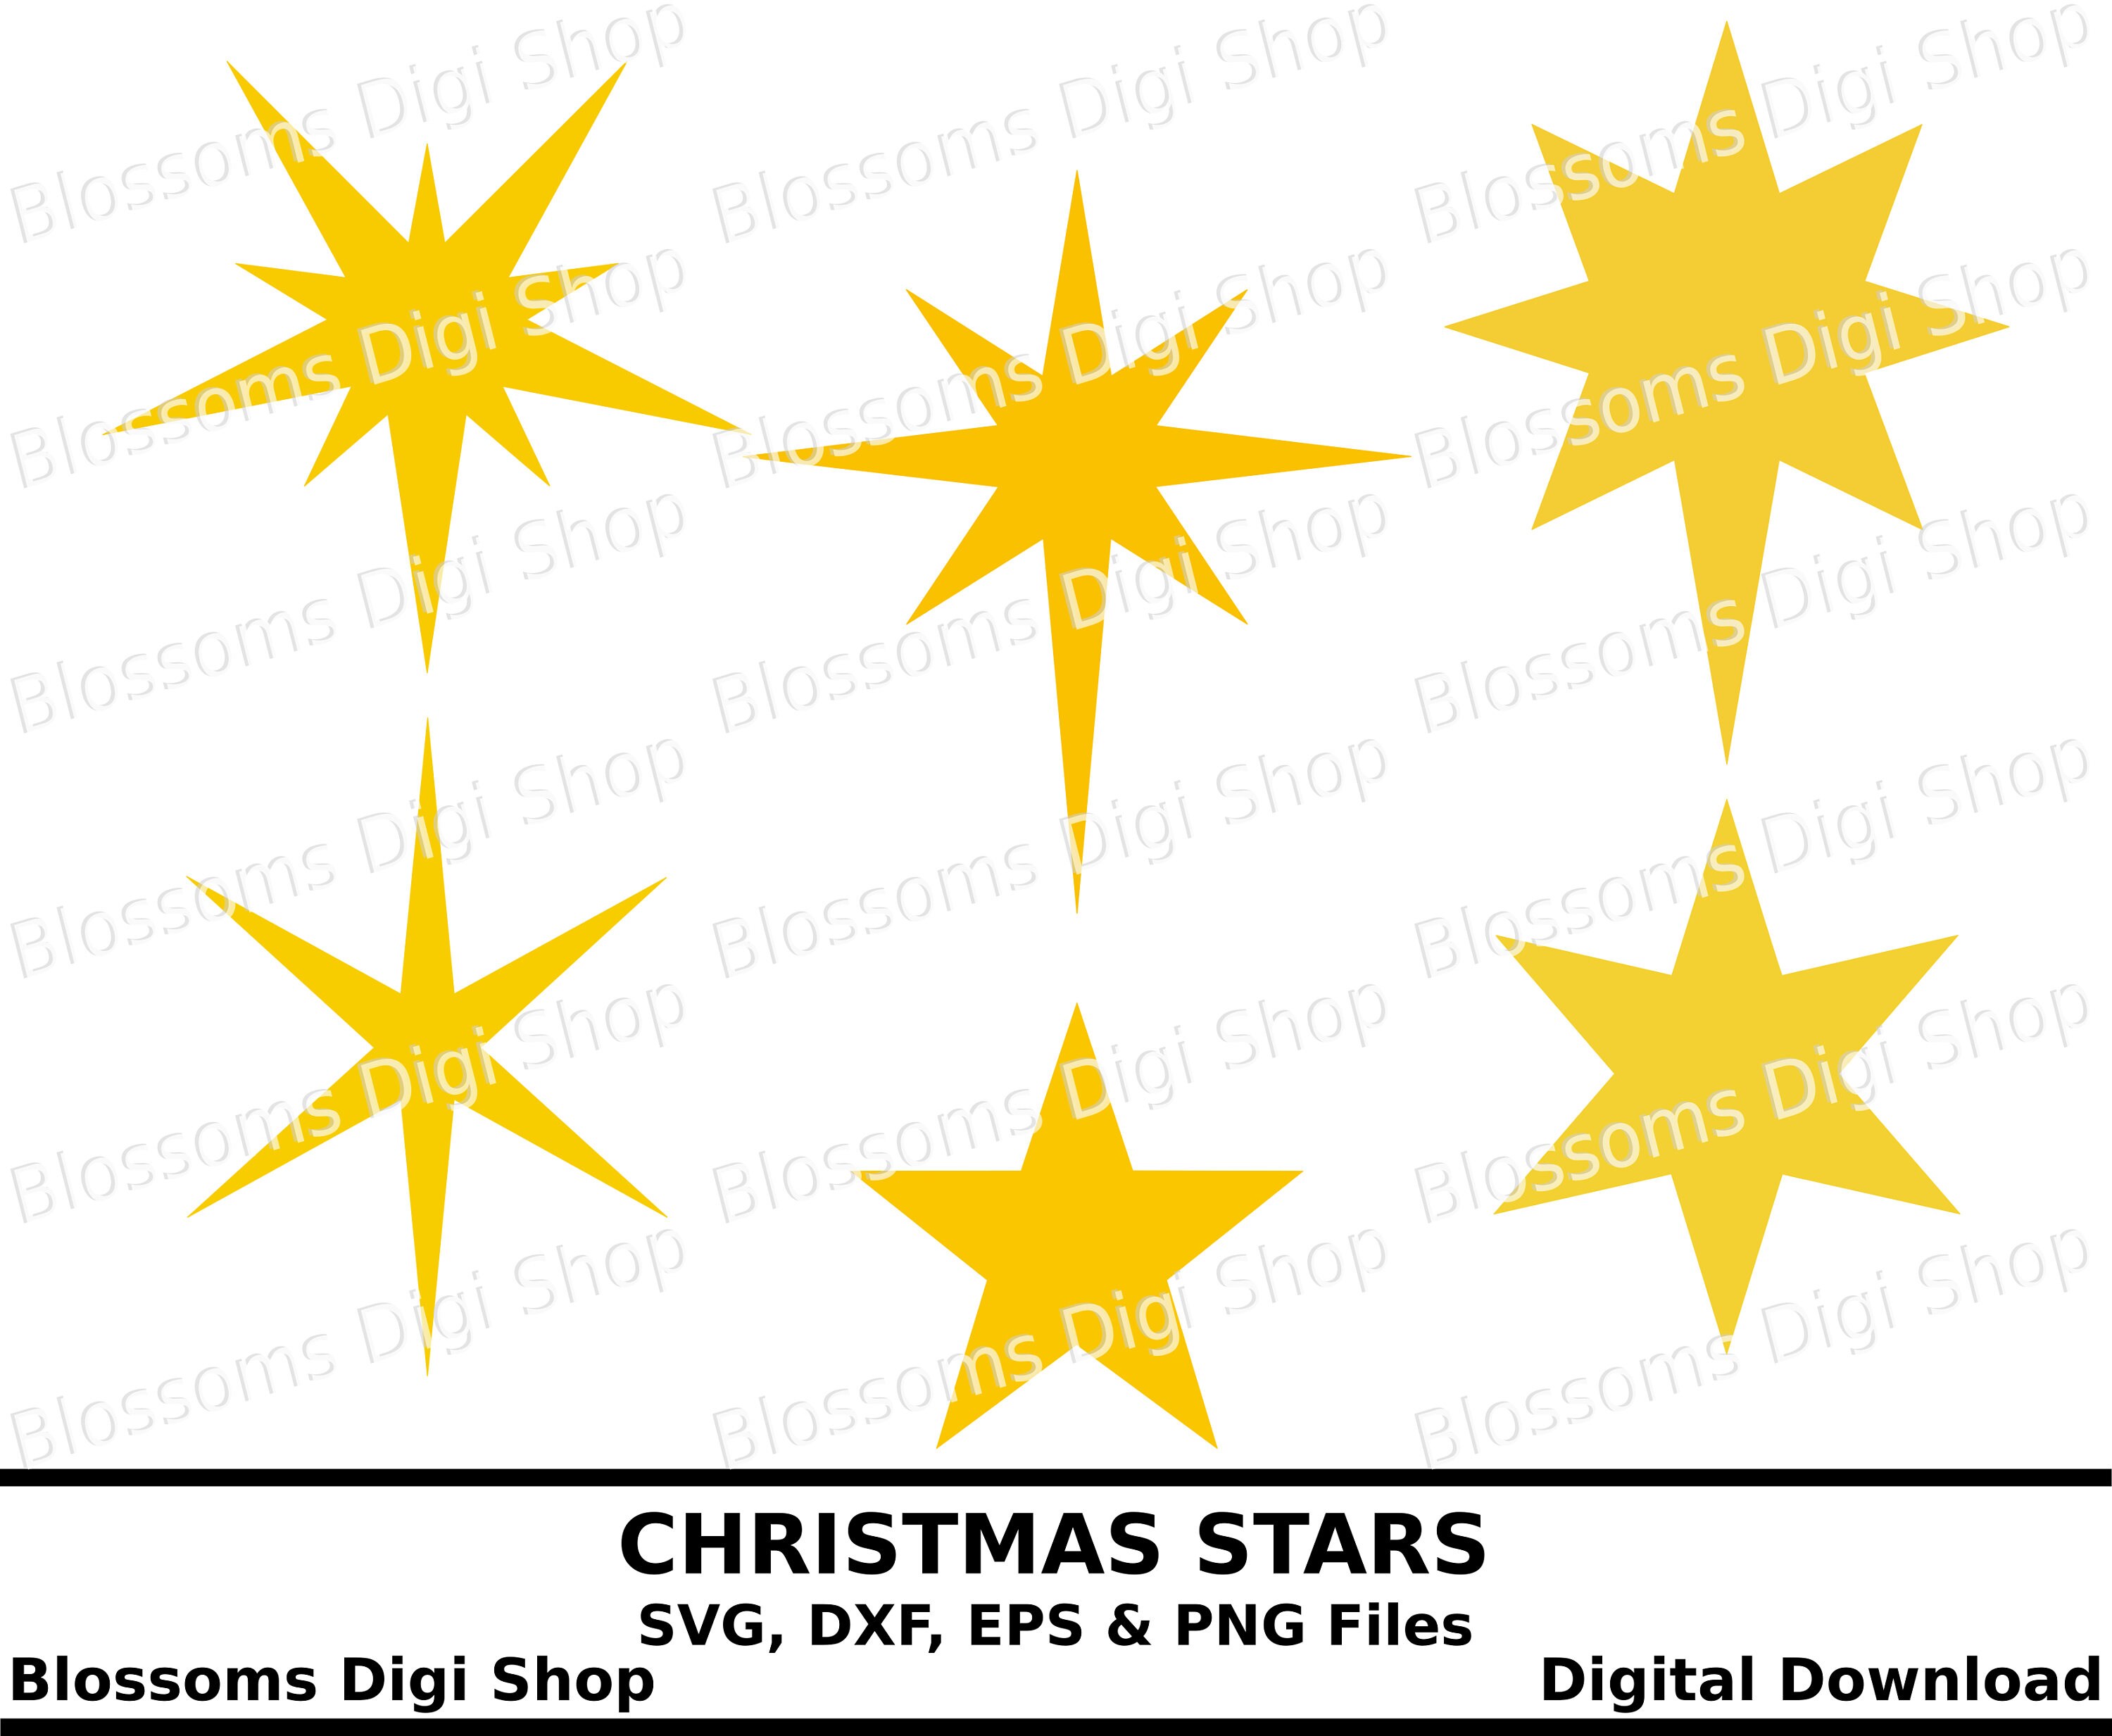 Download Christmas stars svg digital download star template star cut